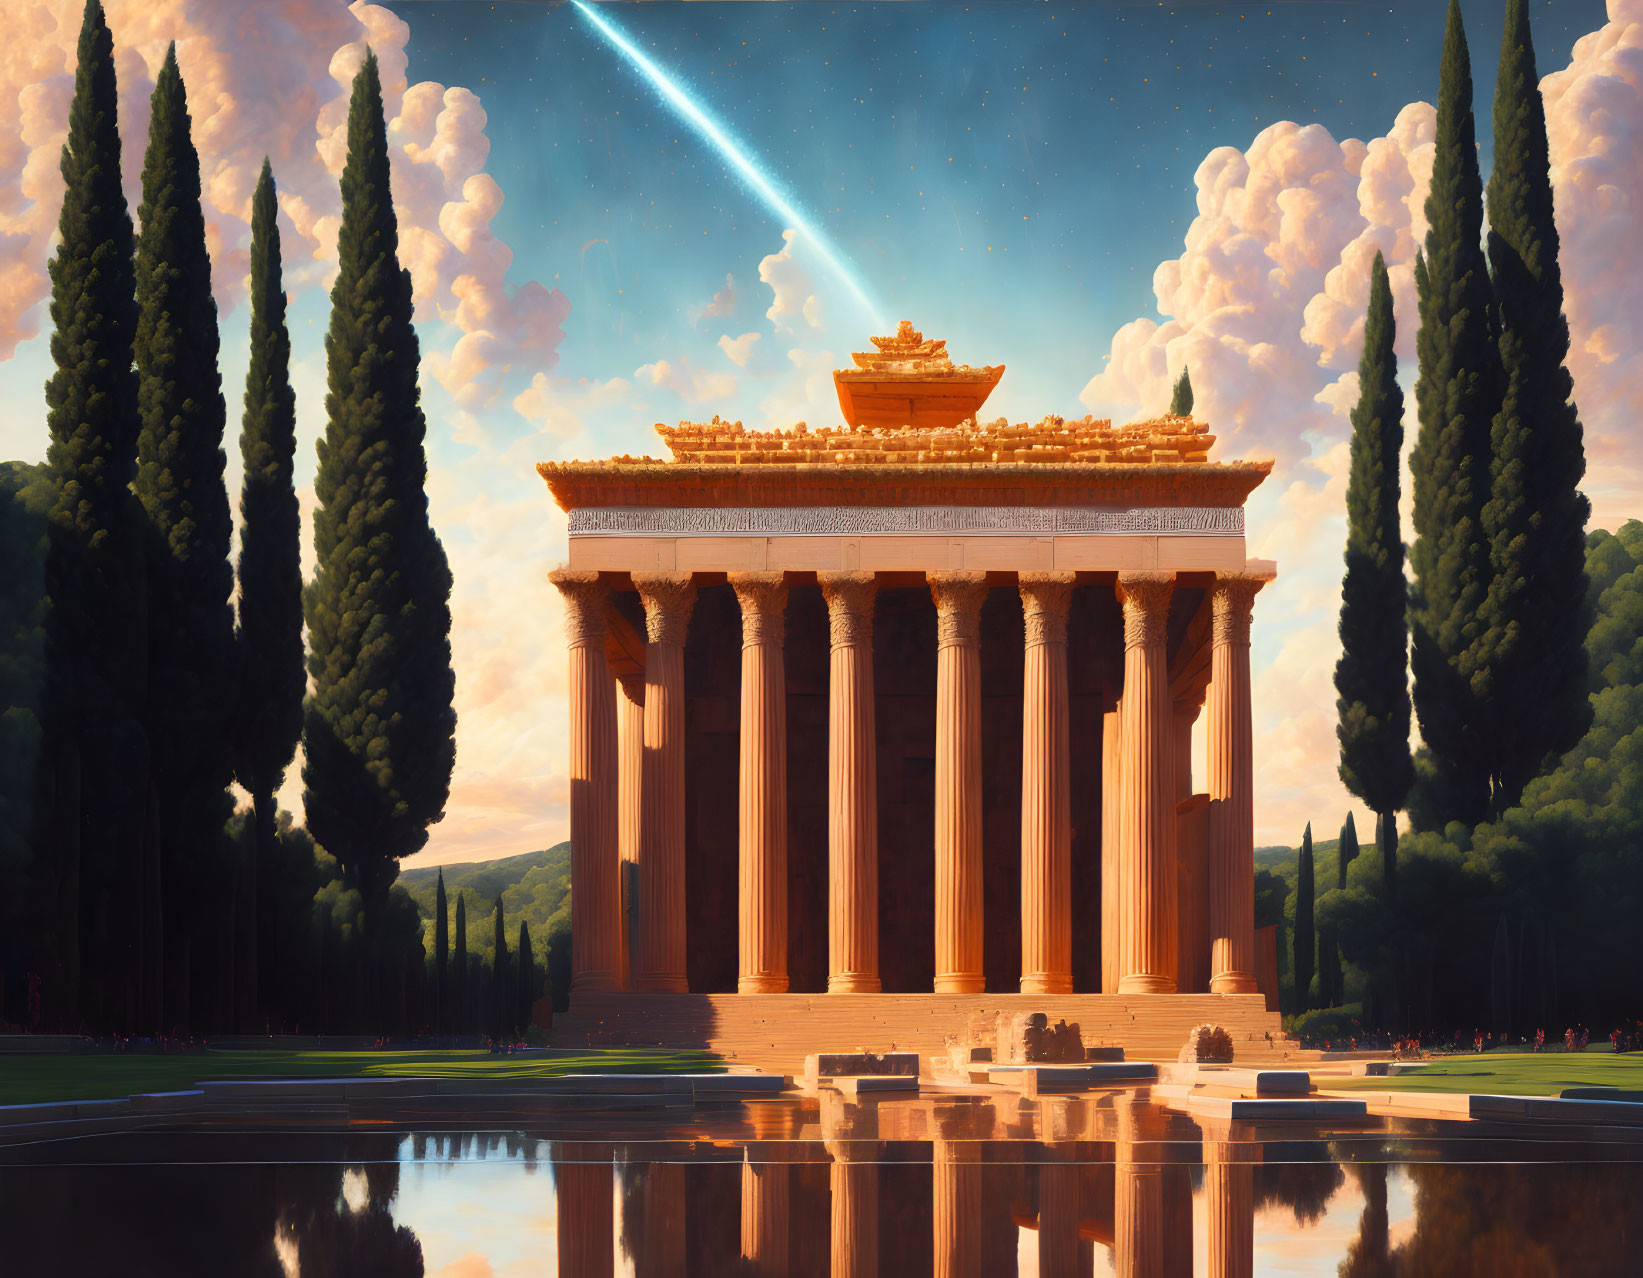 Ancient Greek temple